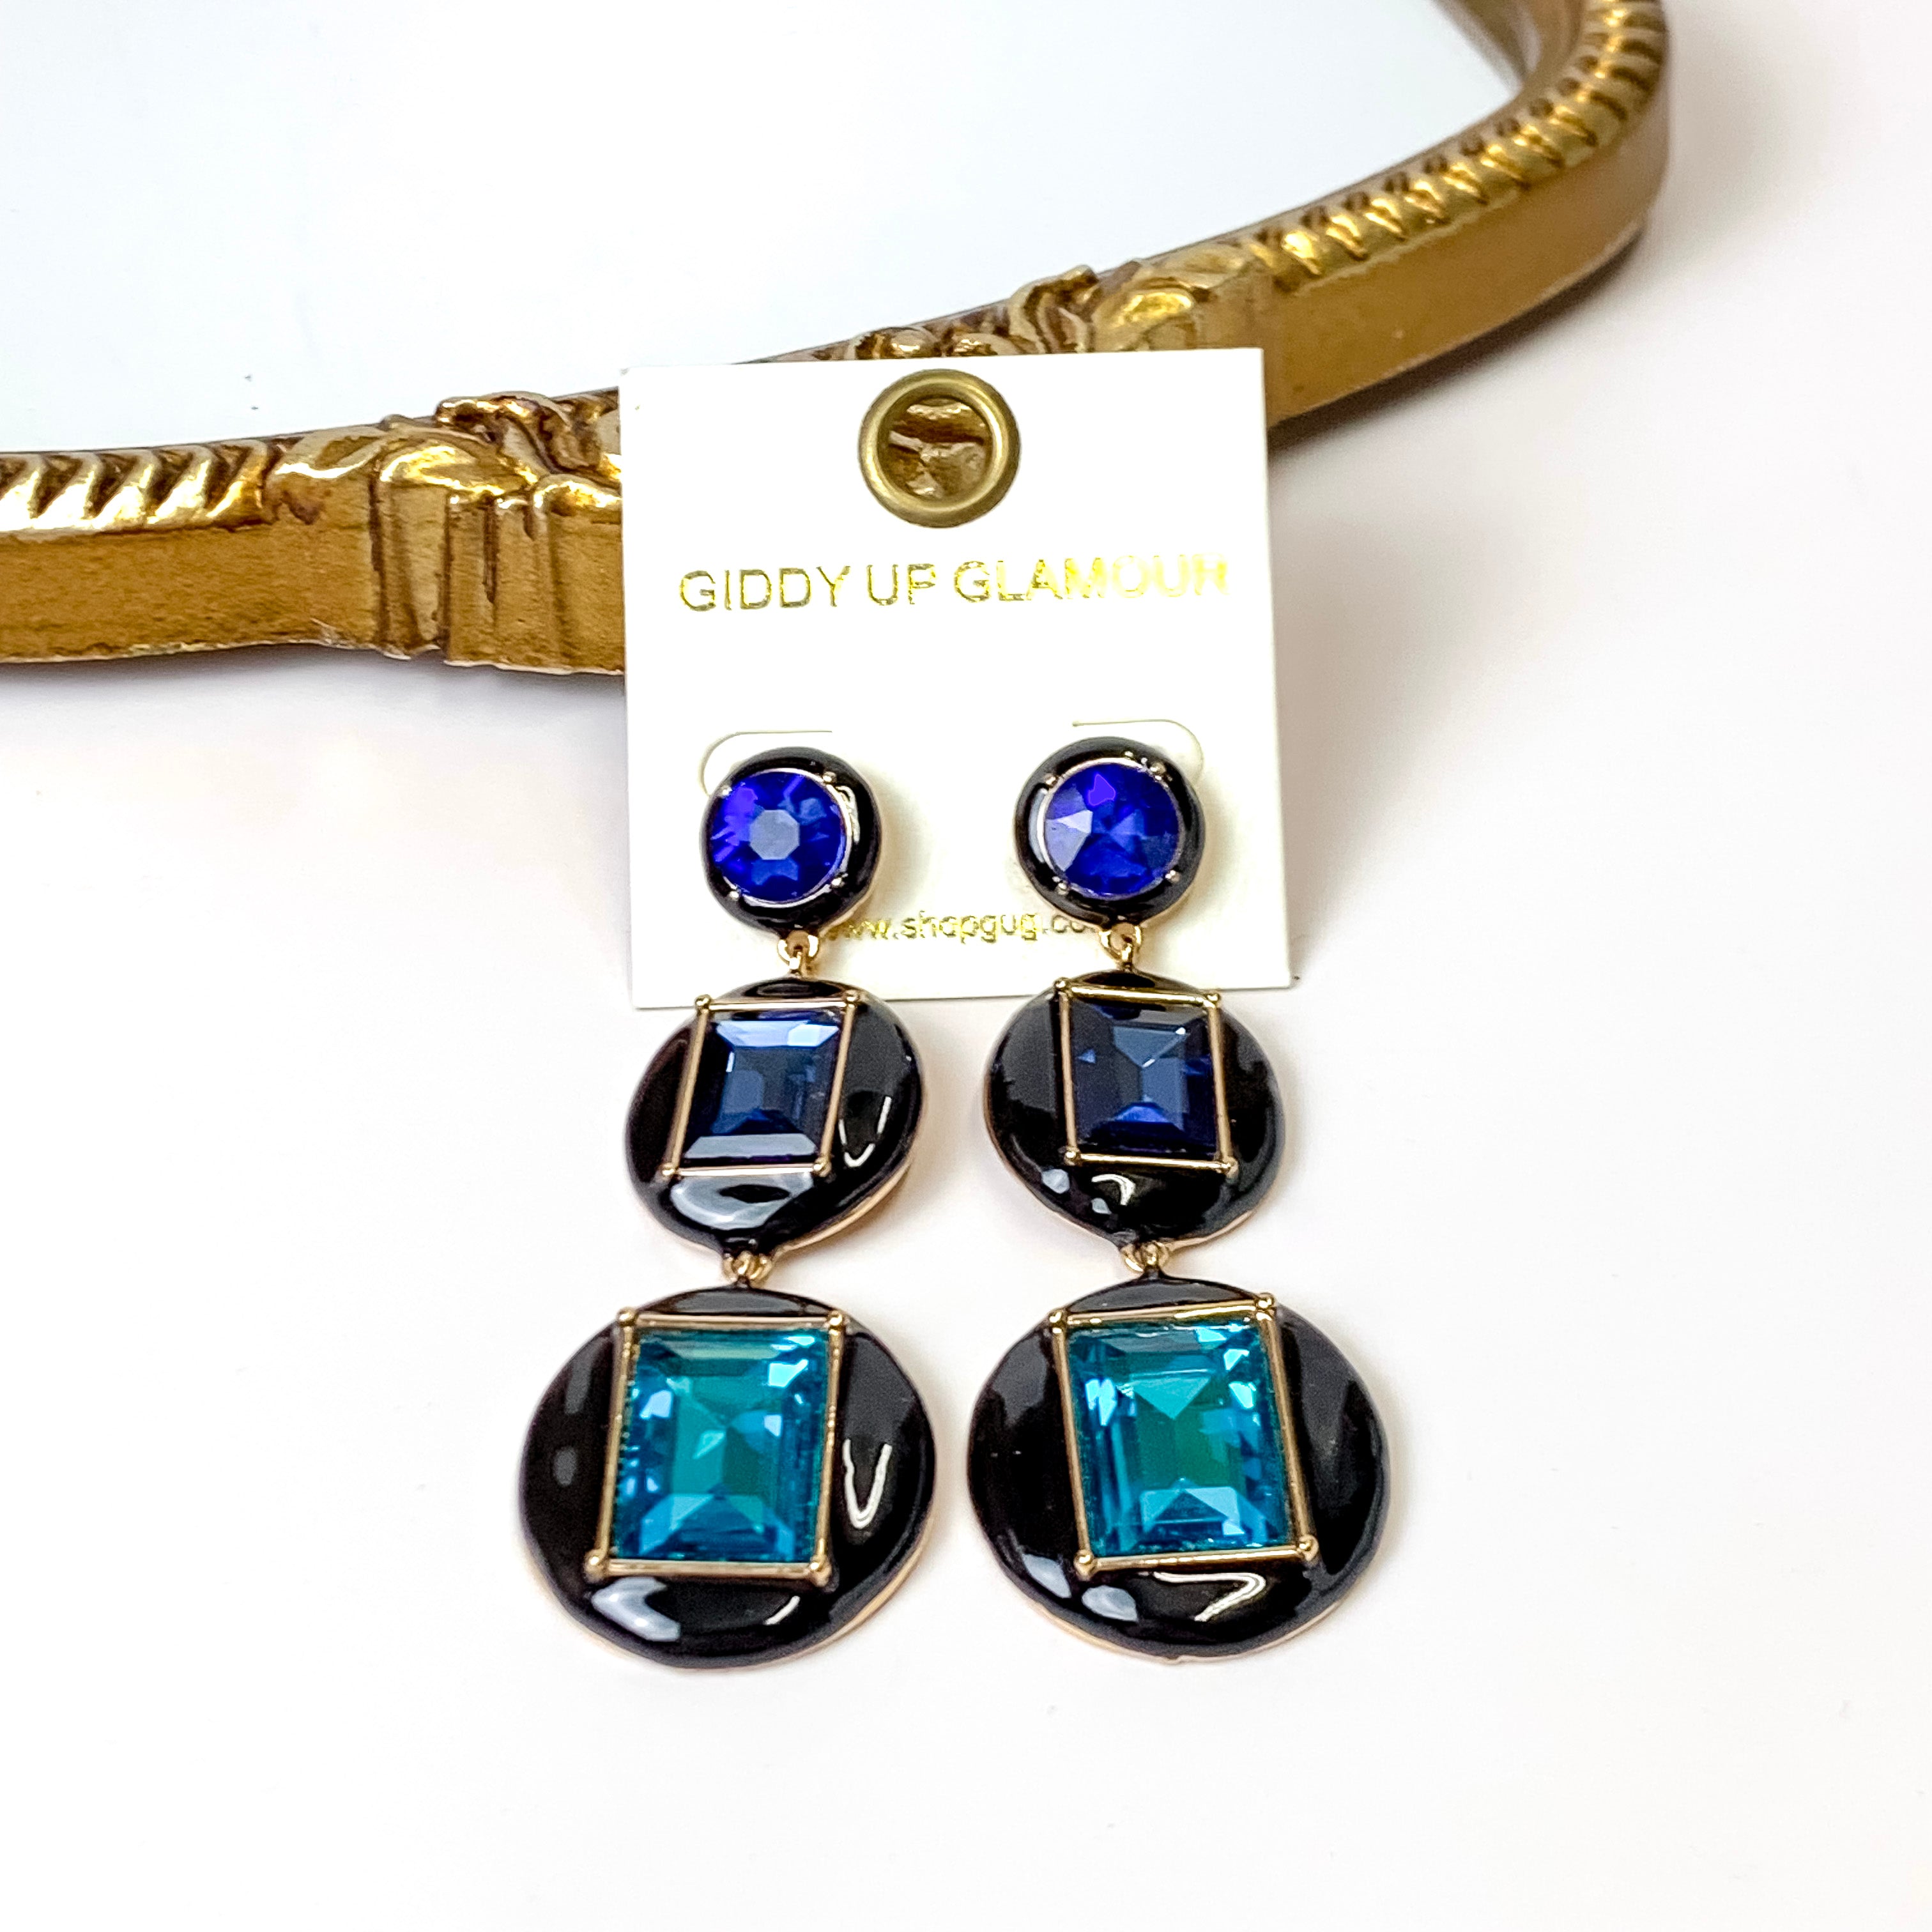 3 Tier Multicolor Enamel Framed Stone Drop Earrings in Jet Black - Giddy Up Glamour Boutique